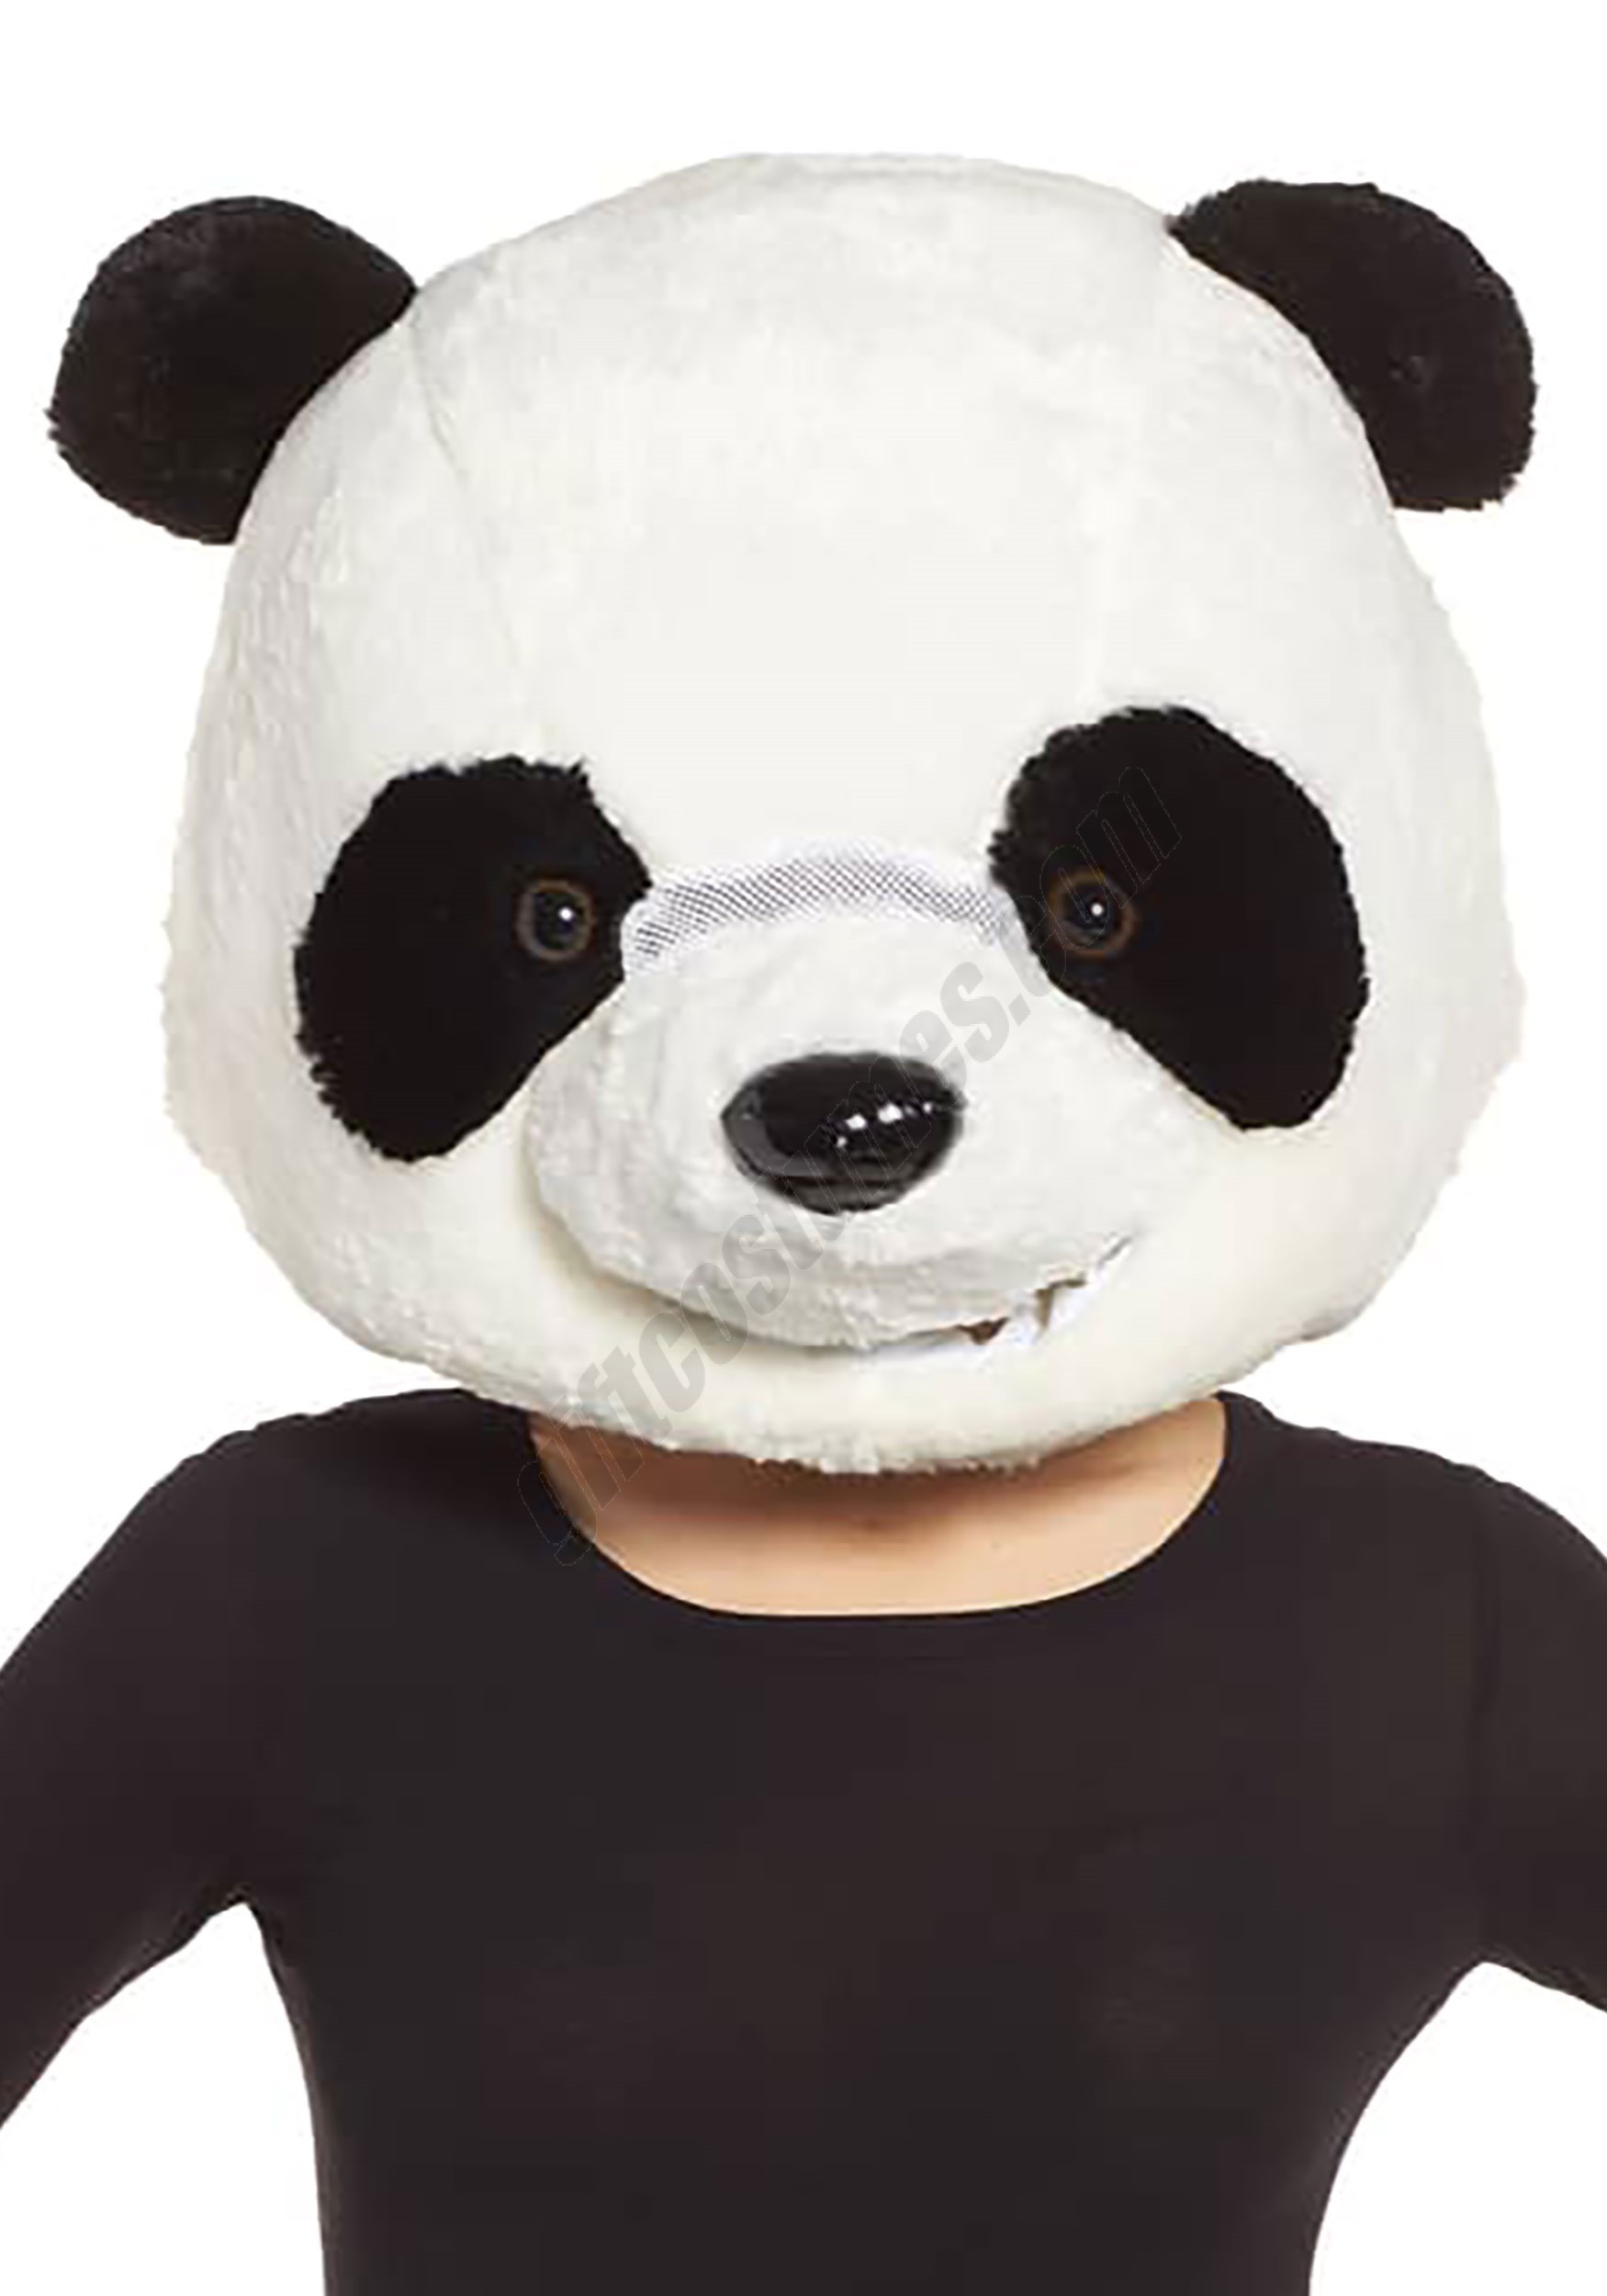 Panda Mascot Head Promotions - Panda Mascot Head Promotions